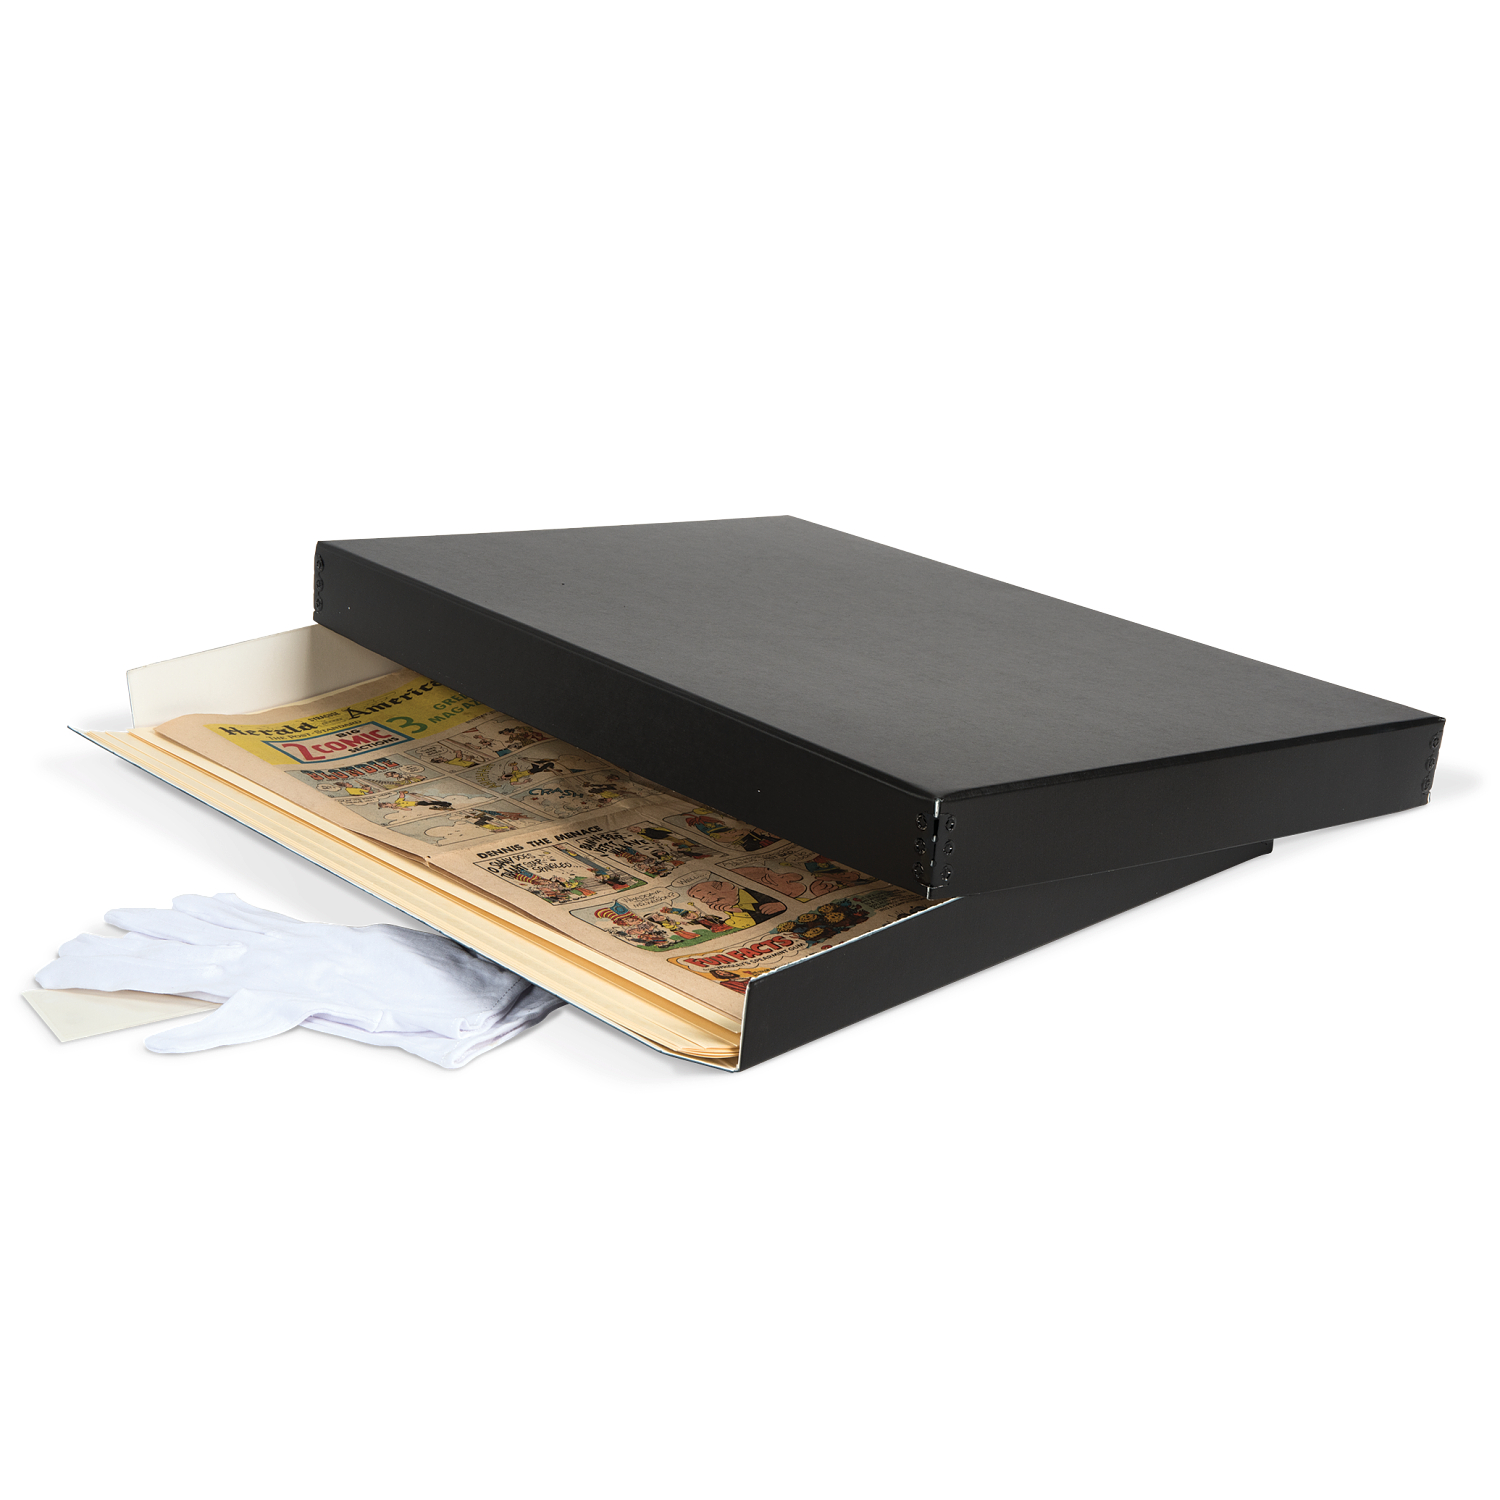 Extra Large Stamp Storage Envelopes - Set of 10